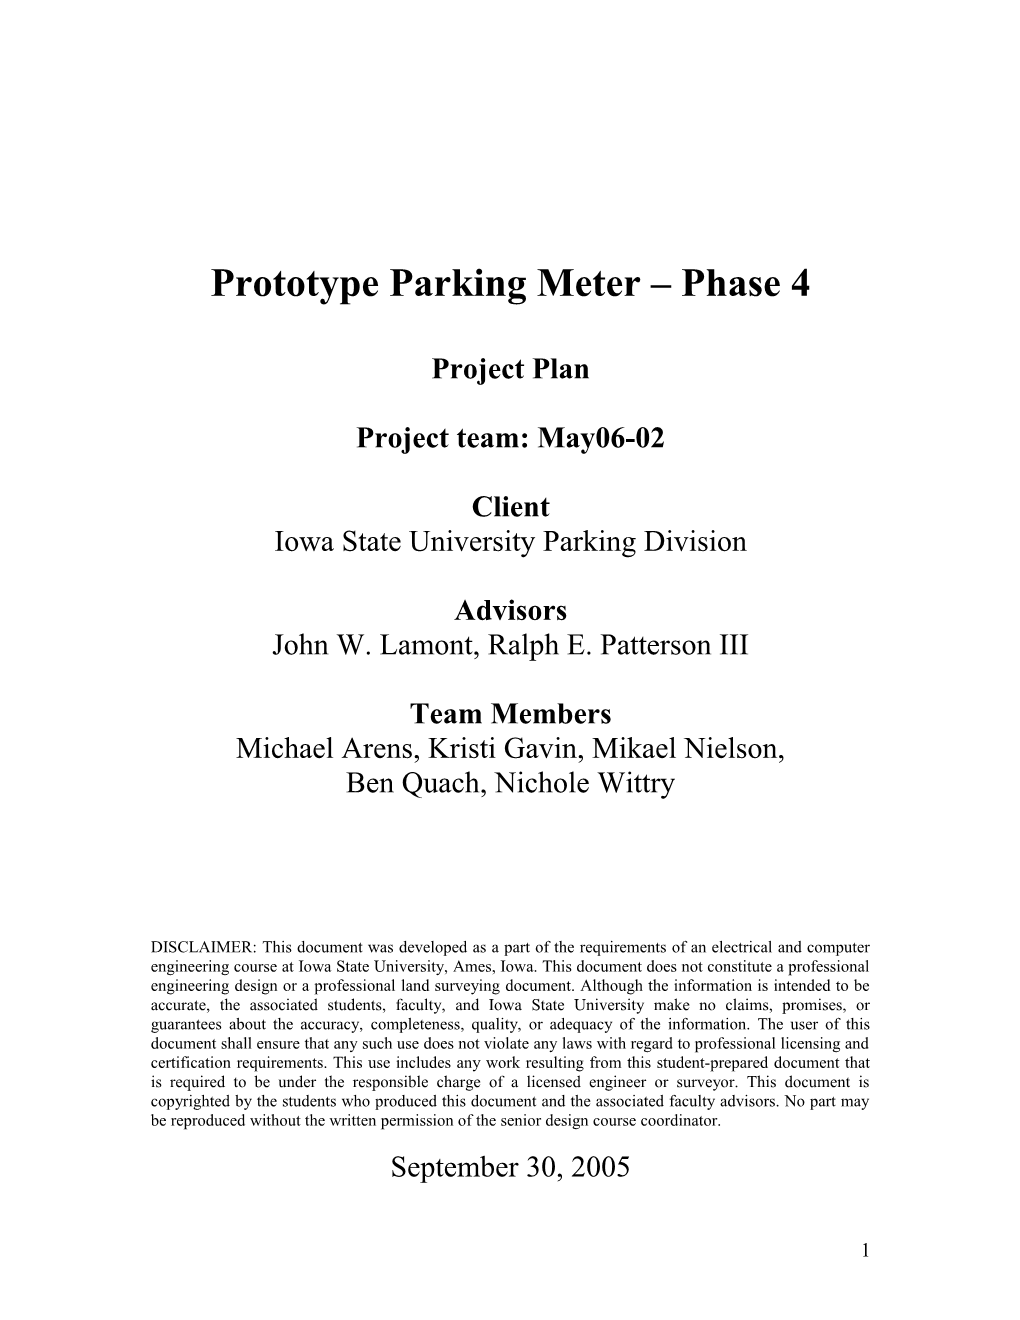 Prototype Parking Meter Phase 4